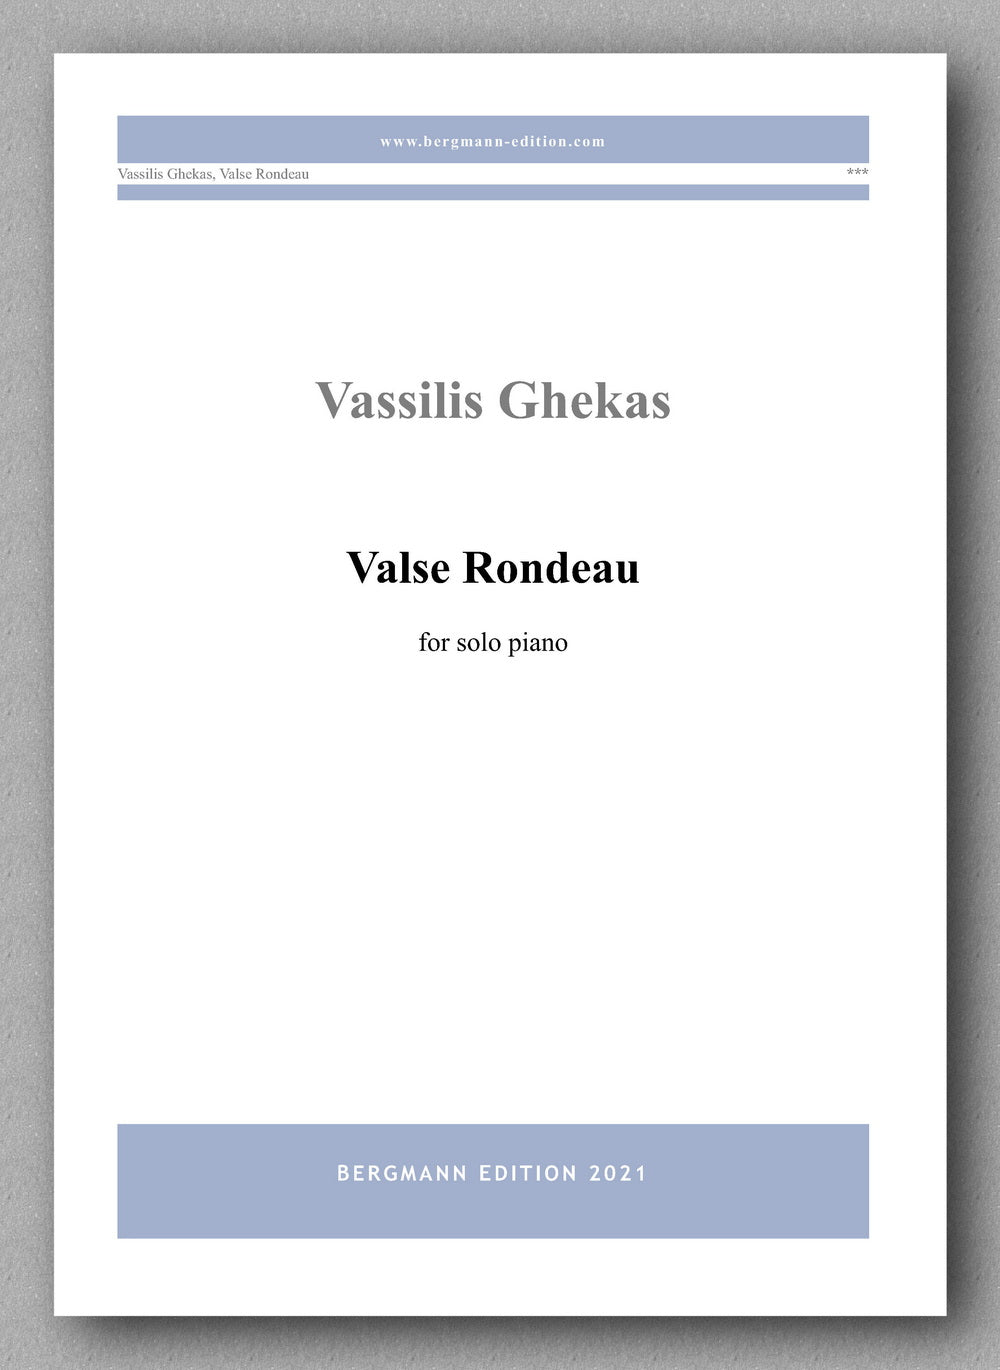 Valse Rondeau by Vassilis Ghekas - cover